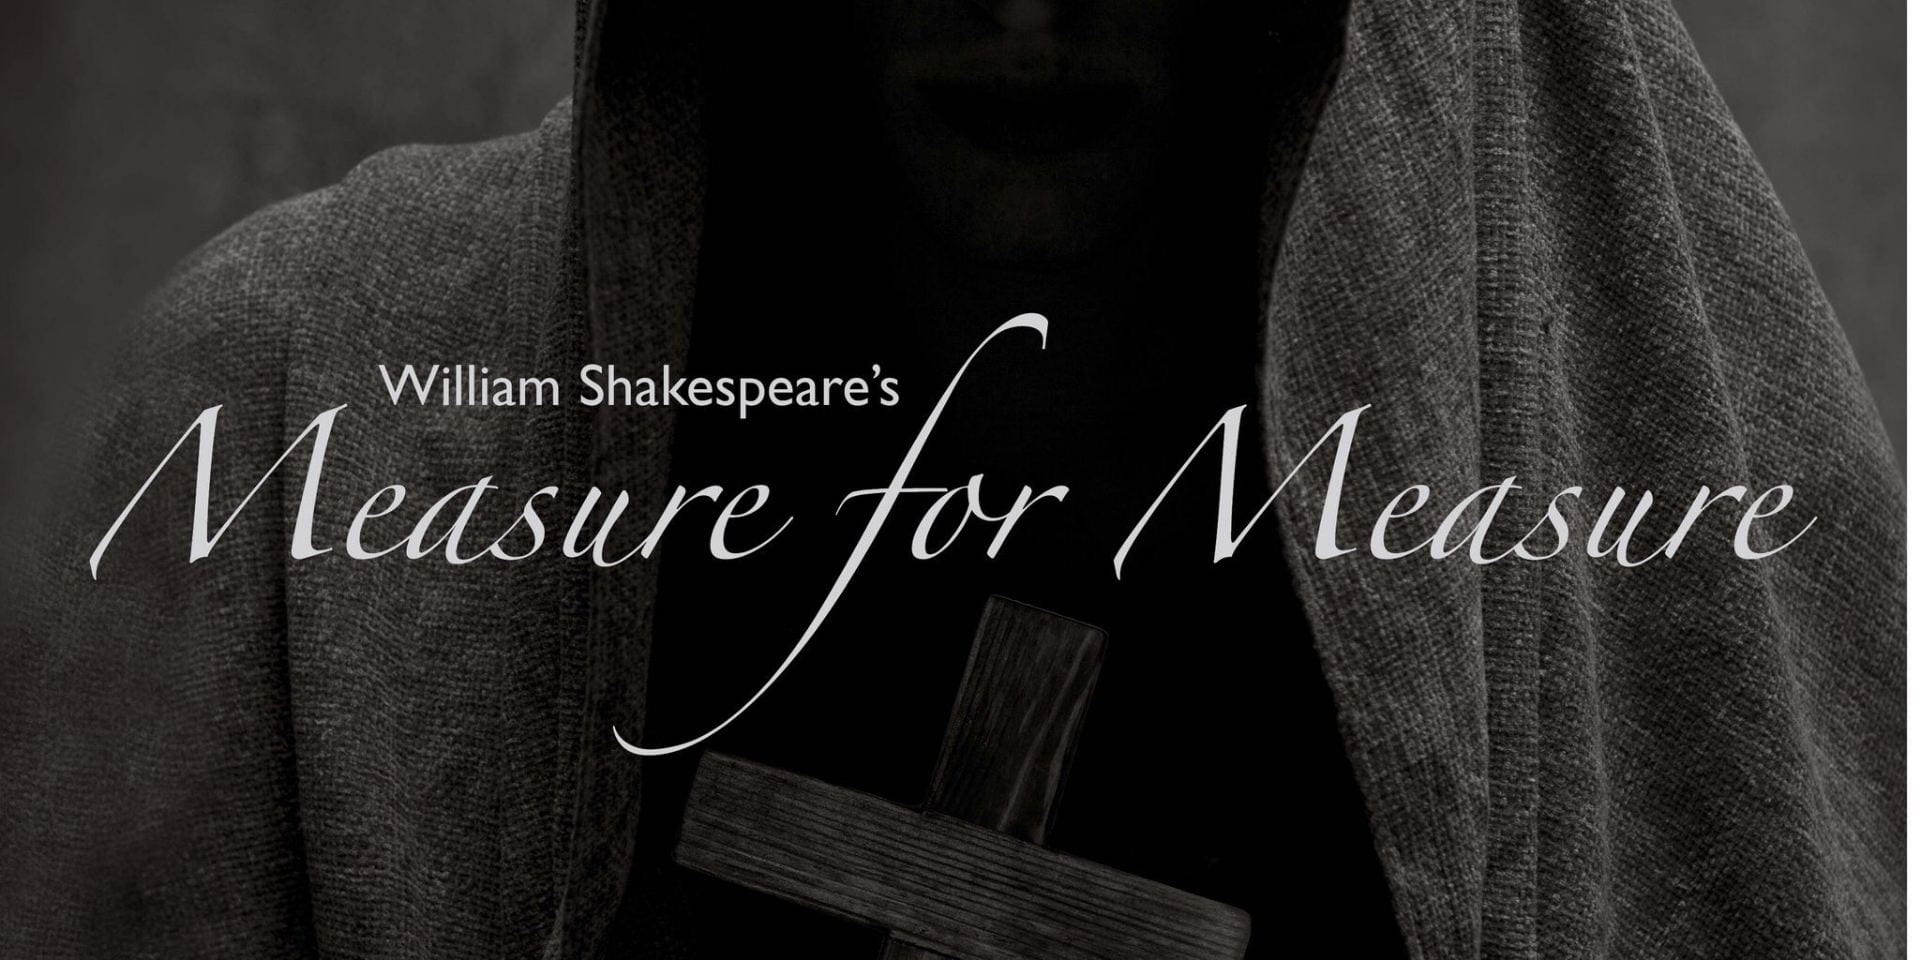 Shakespear's Measure for Measure